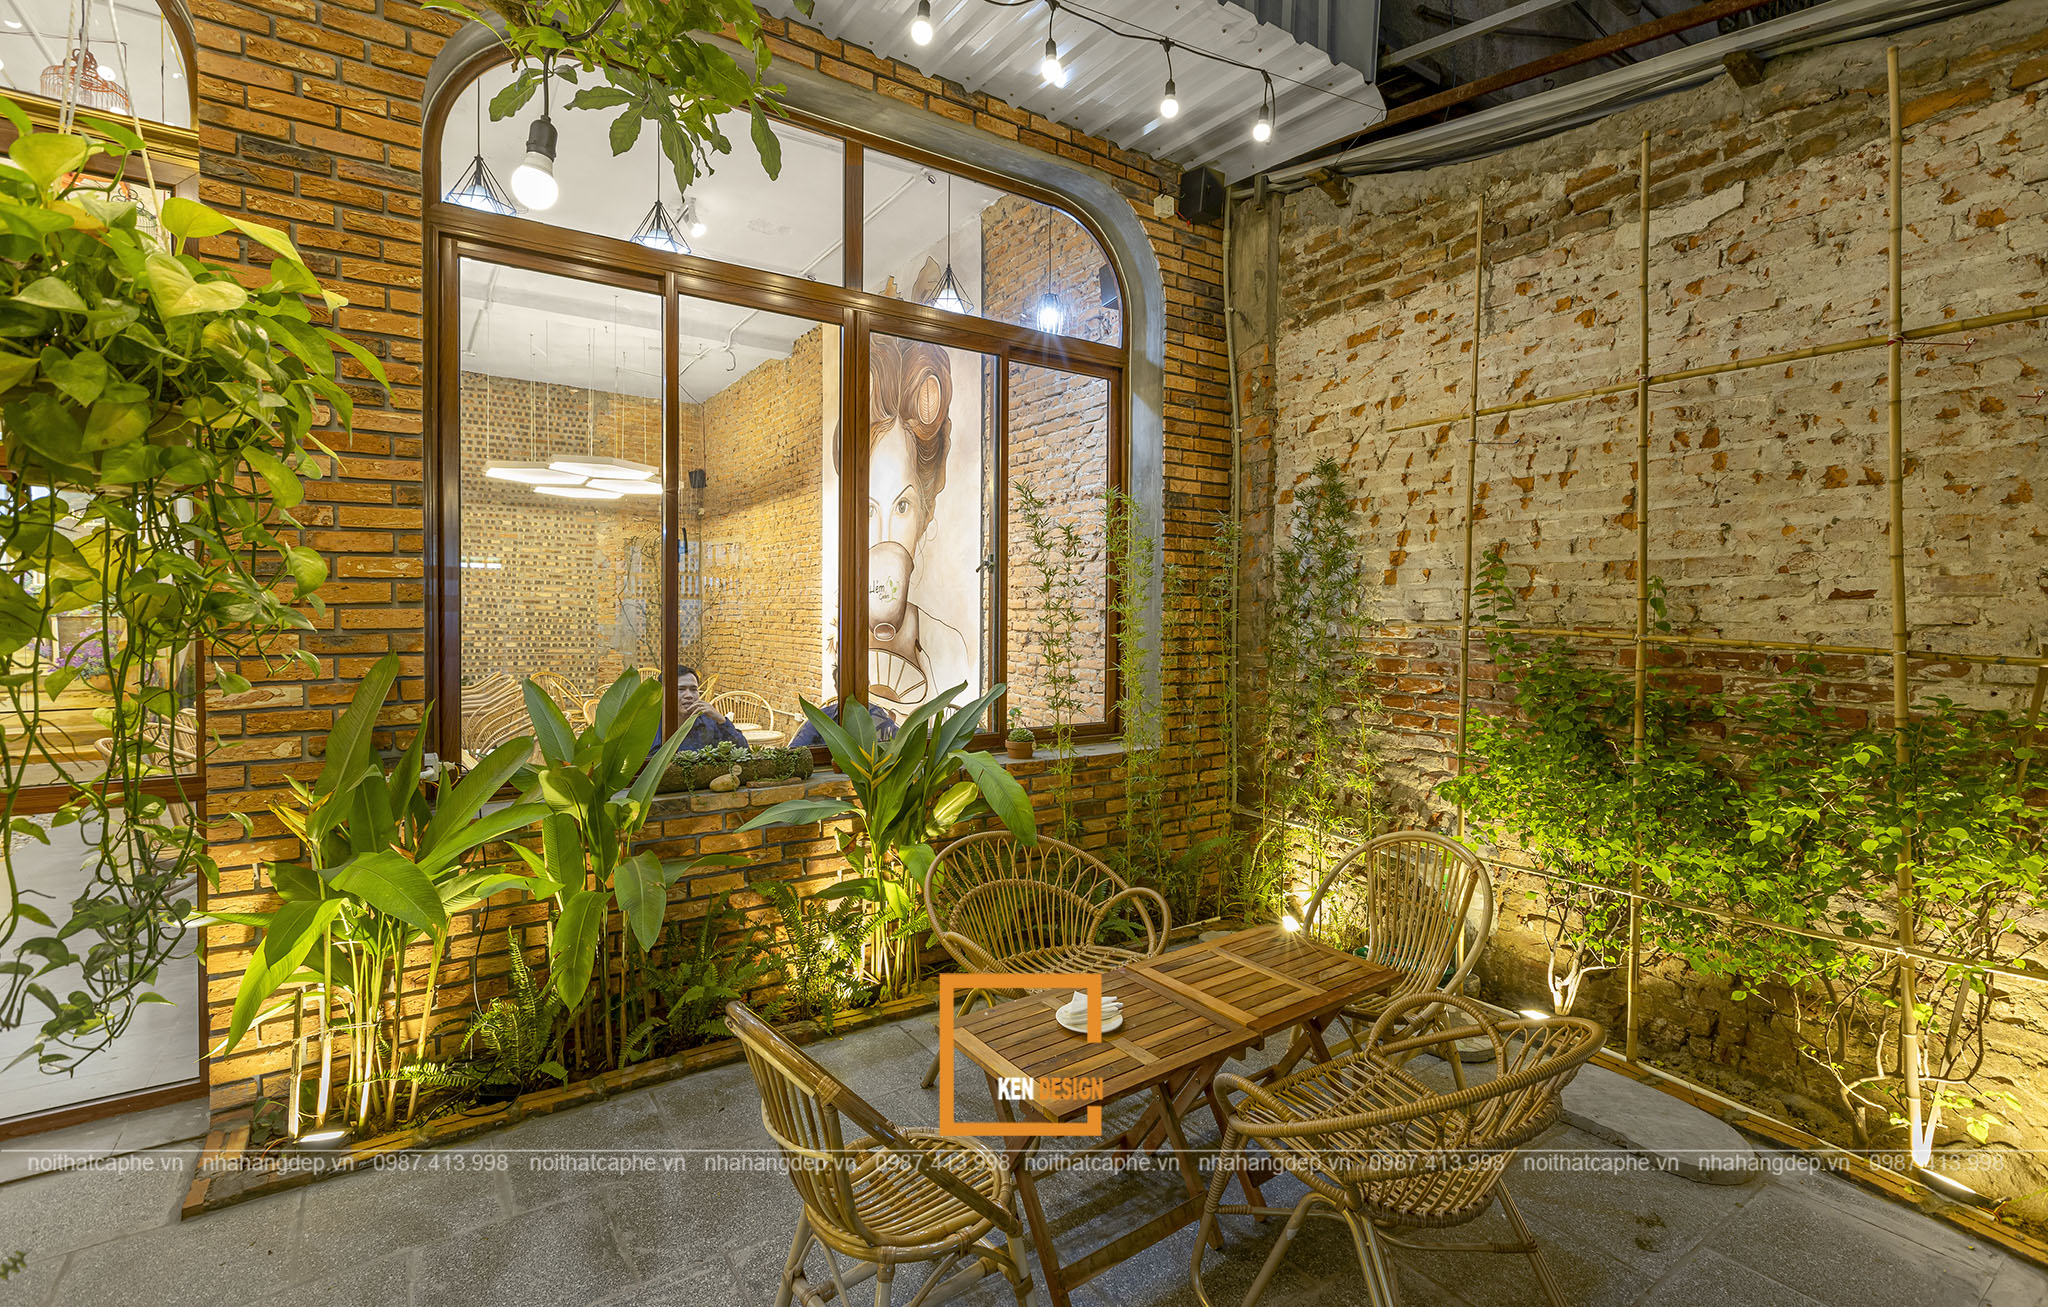 Design of Hem Garden Cafe - An ideal chill spot in the Capital